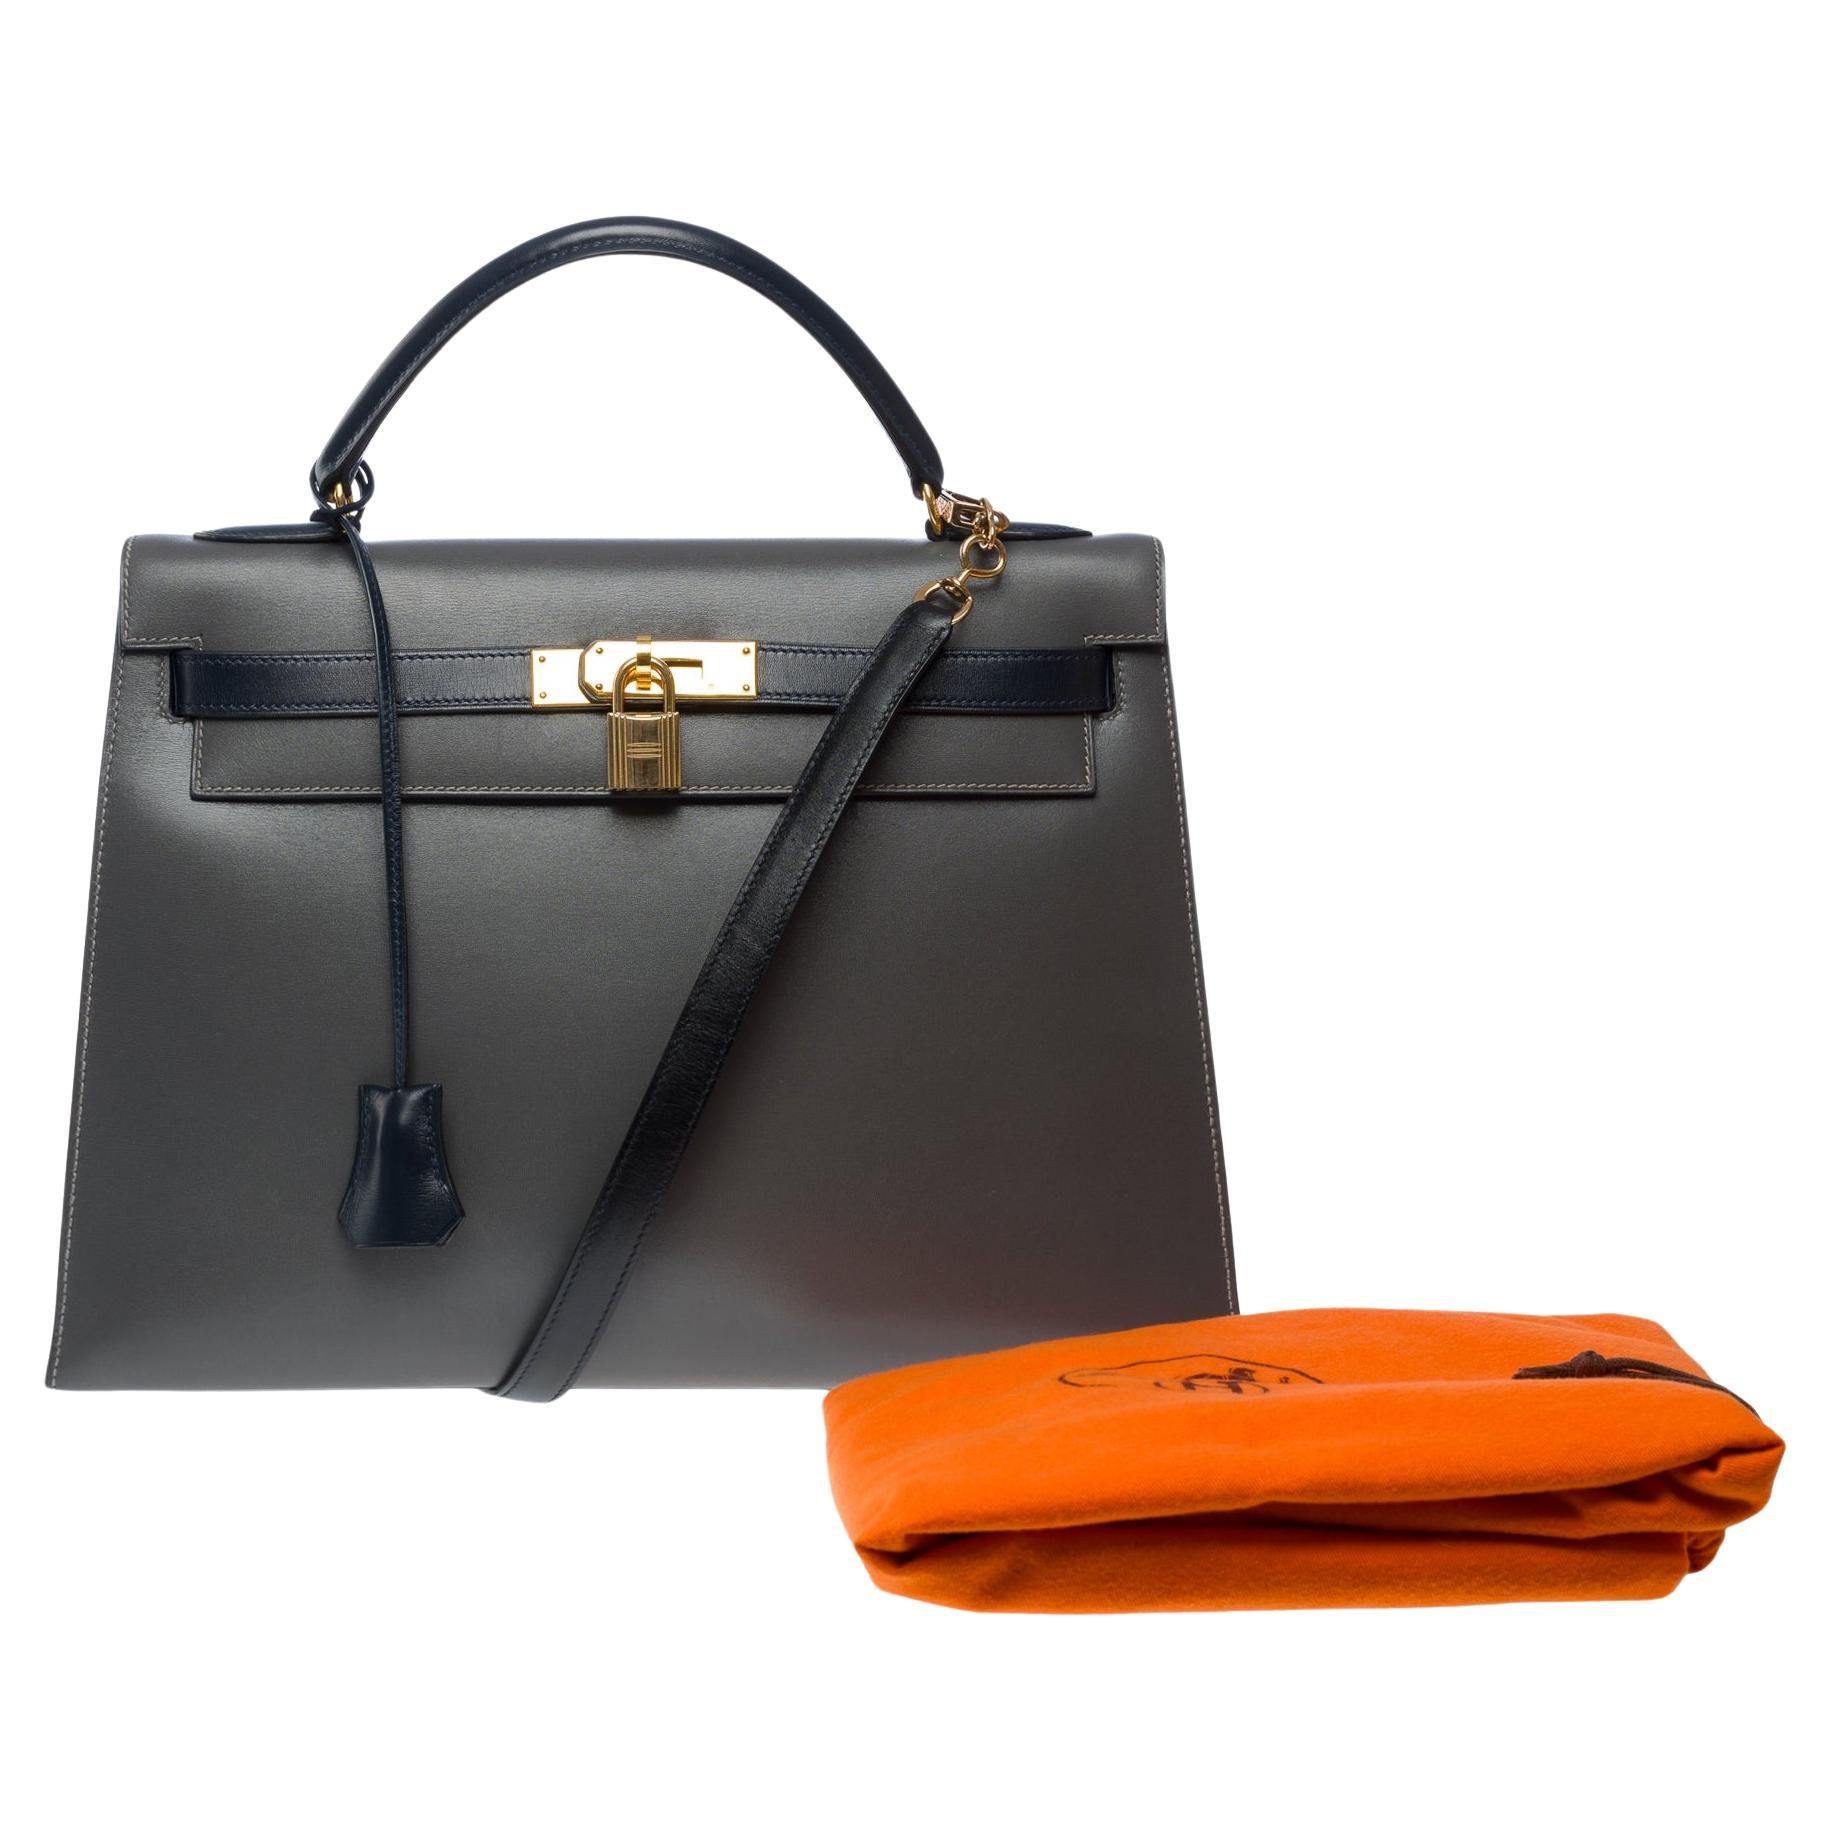 Rare Hermès Kelly 32 sellier handbag strap in Navy & Black calfskin leather, GHW